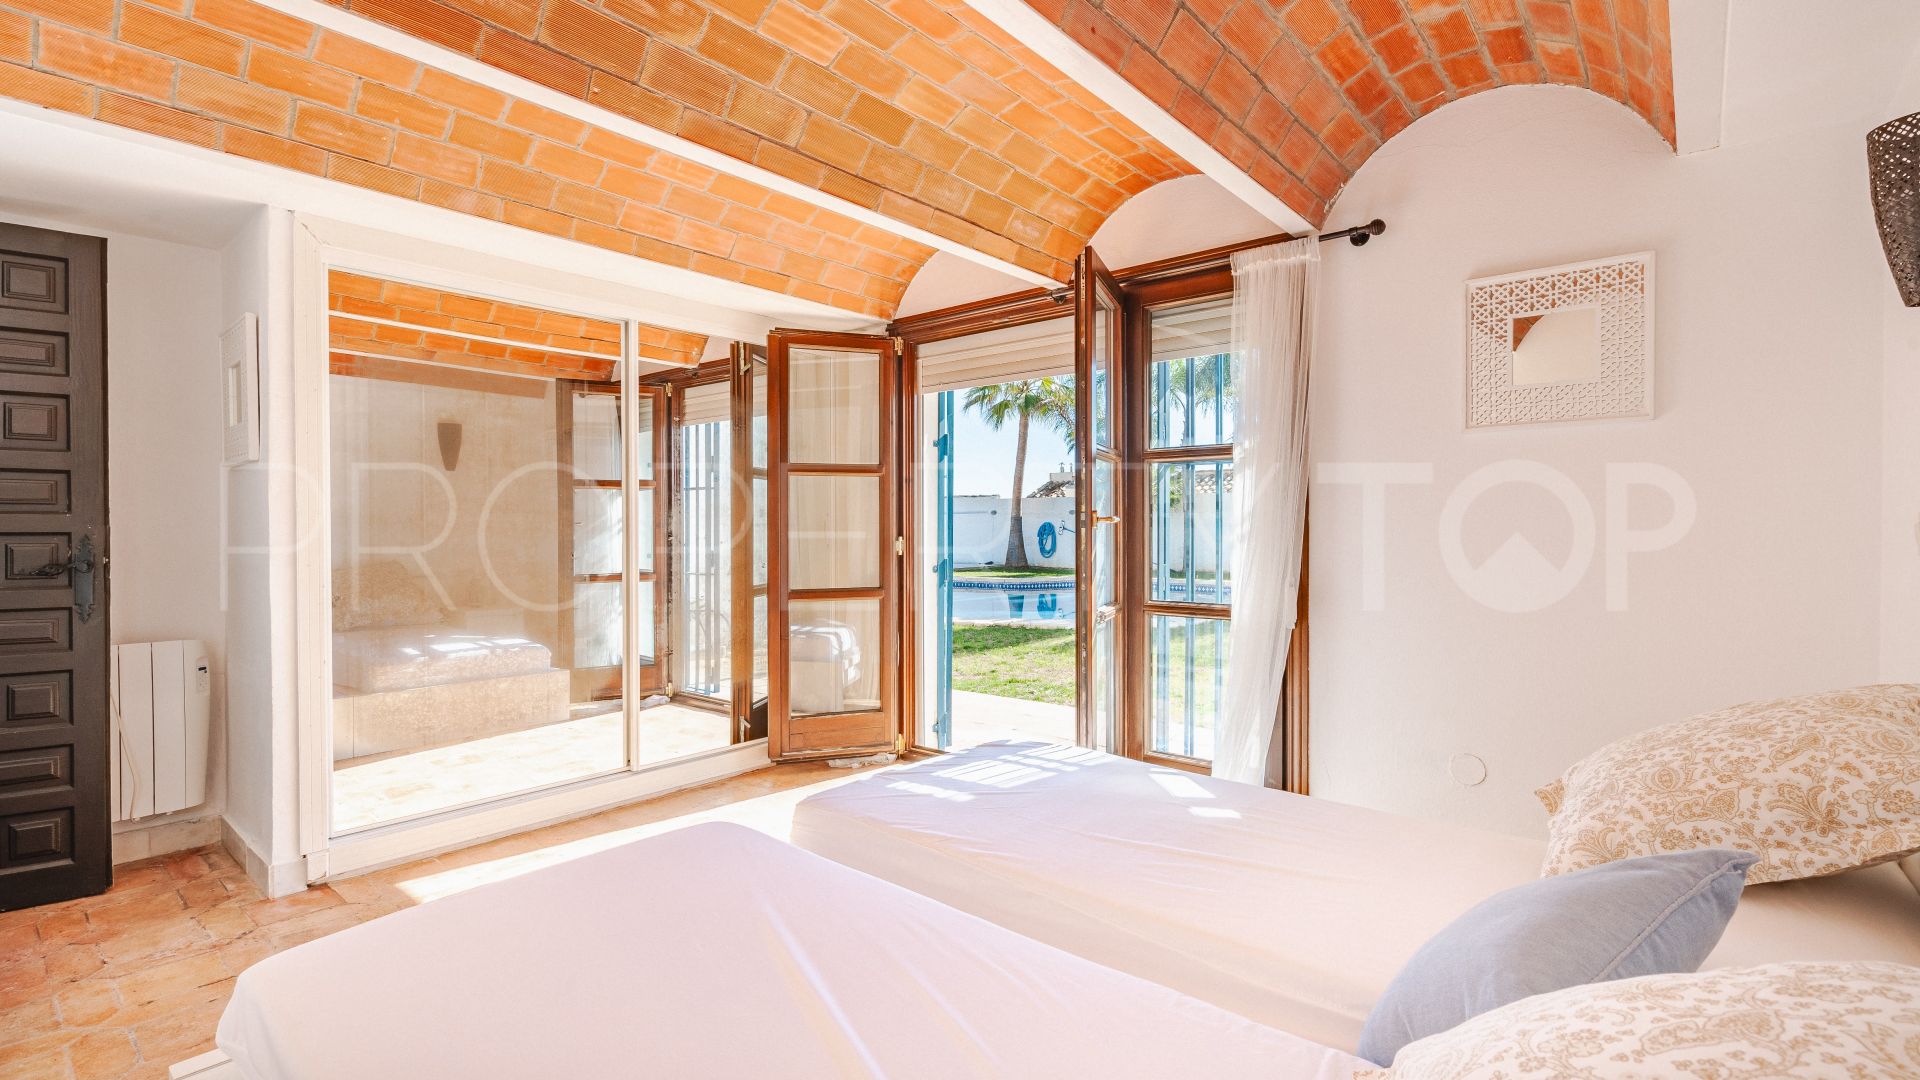 Buy Bahia Dorada 5 bedrooms villa